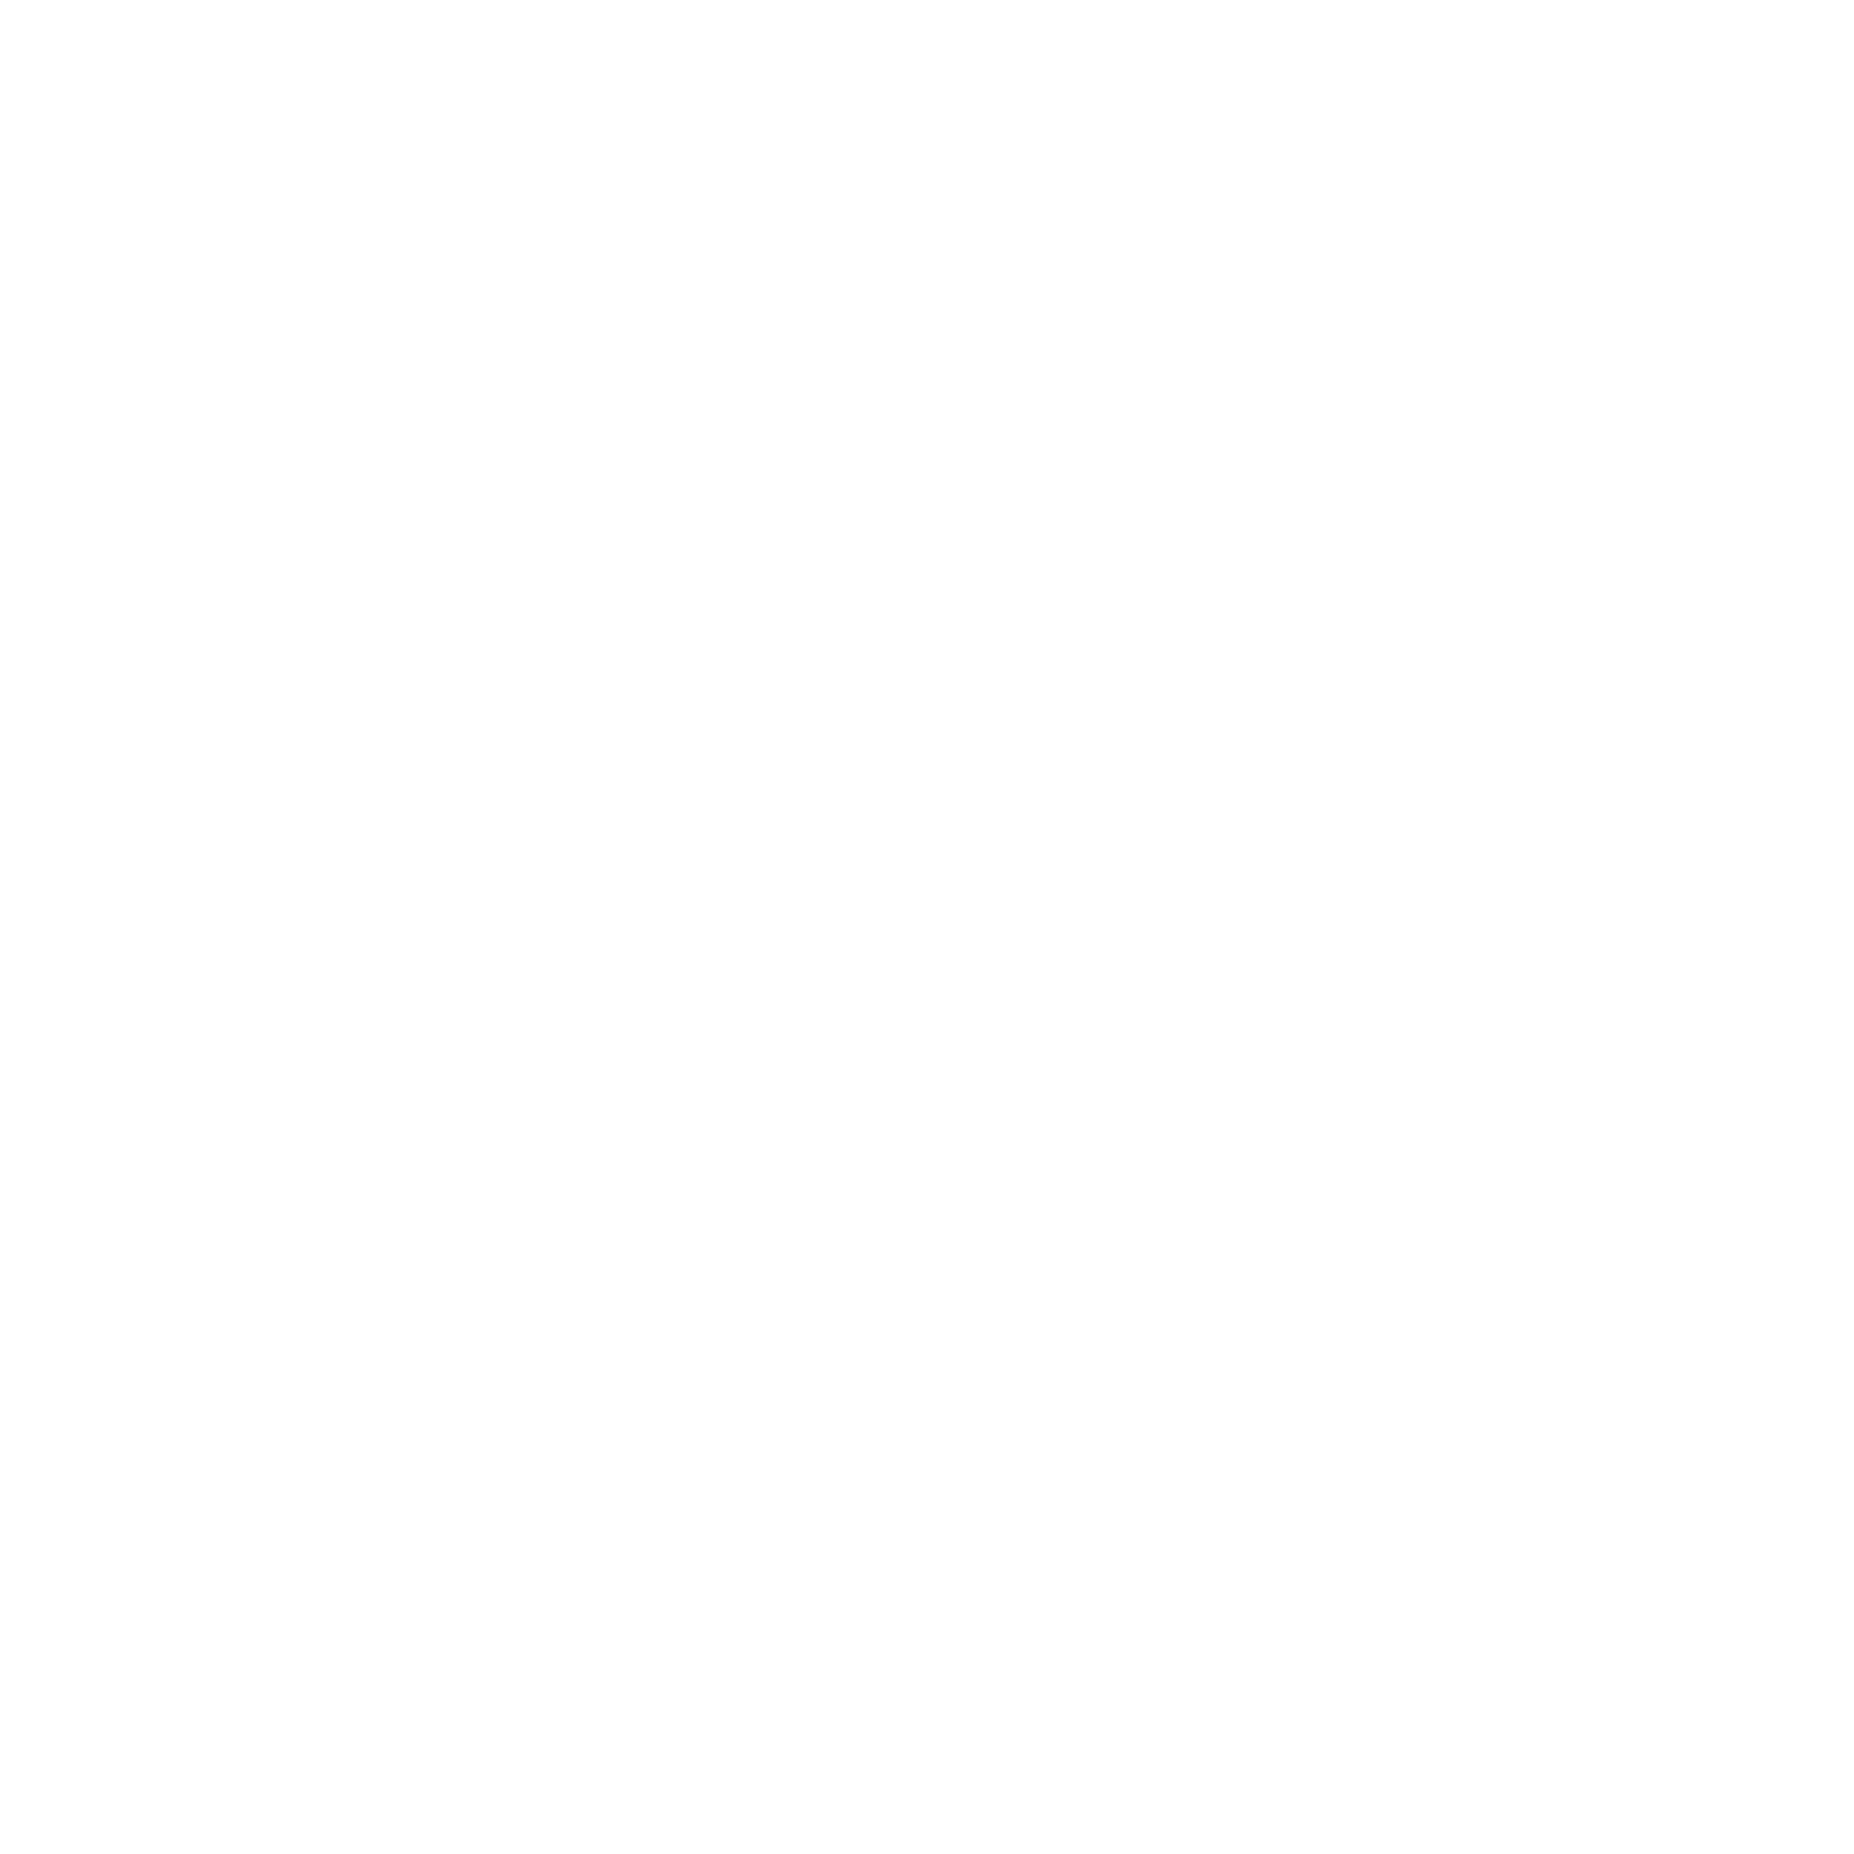 Cleanfix Logo